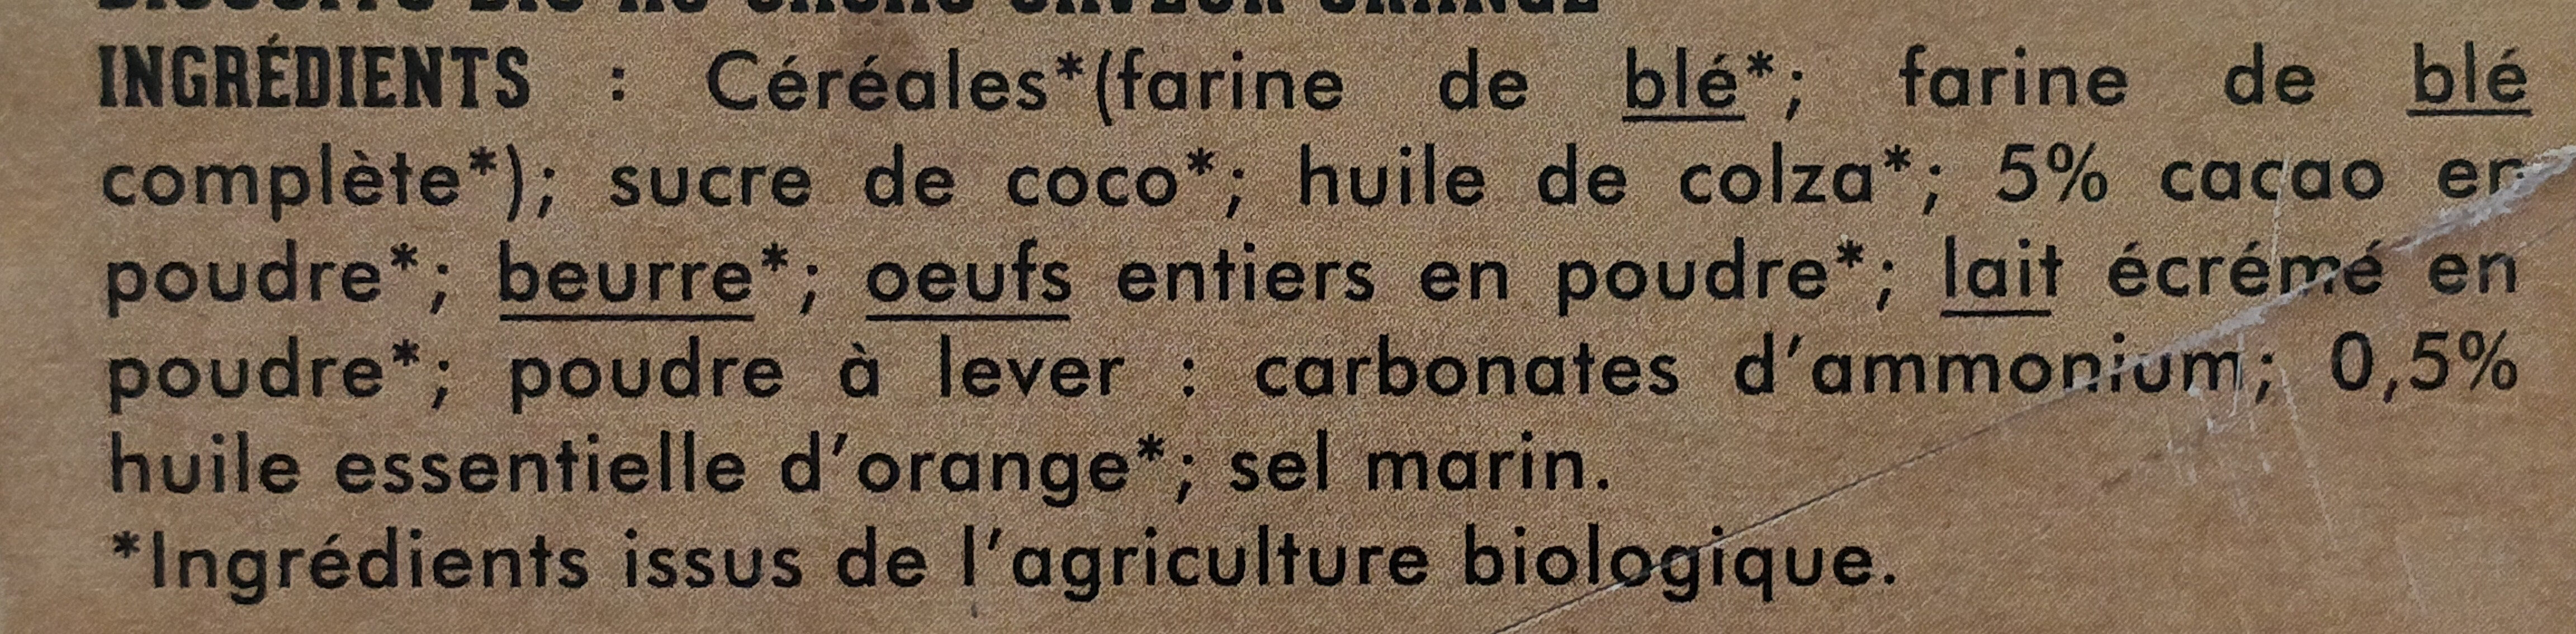 Biscuits bio au cacao saveur orange - Ingredients - fr